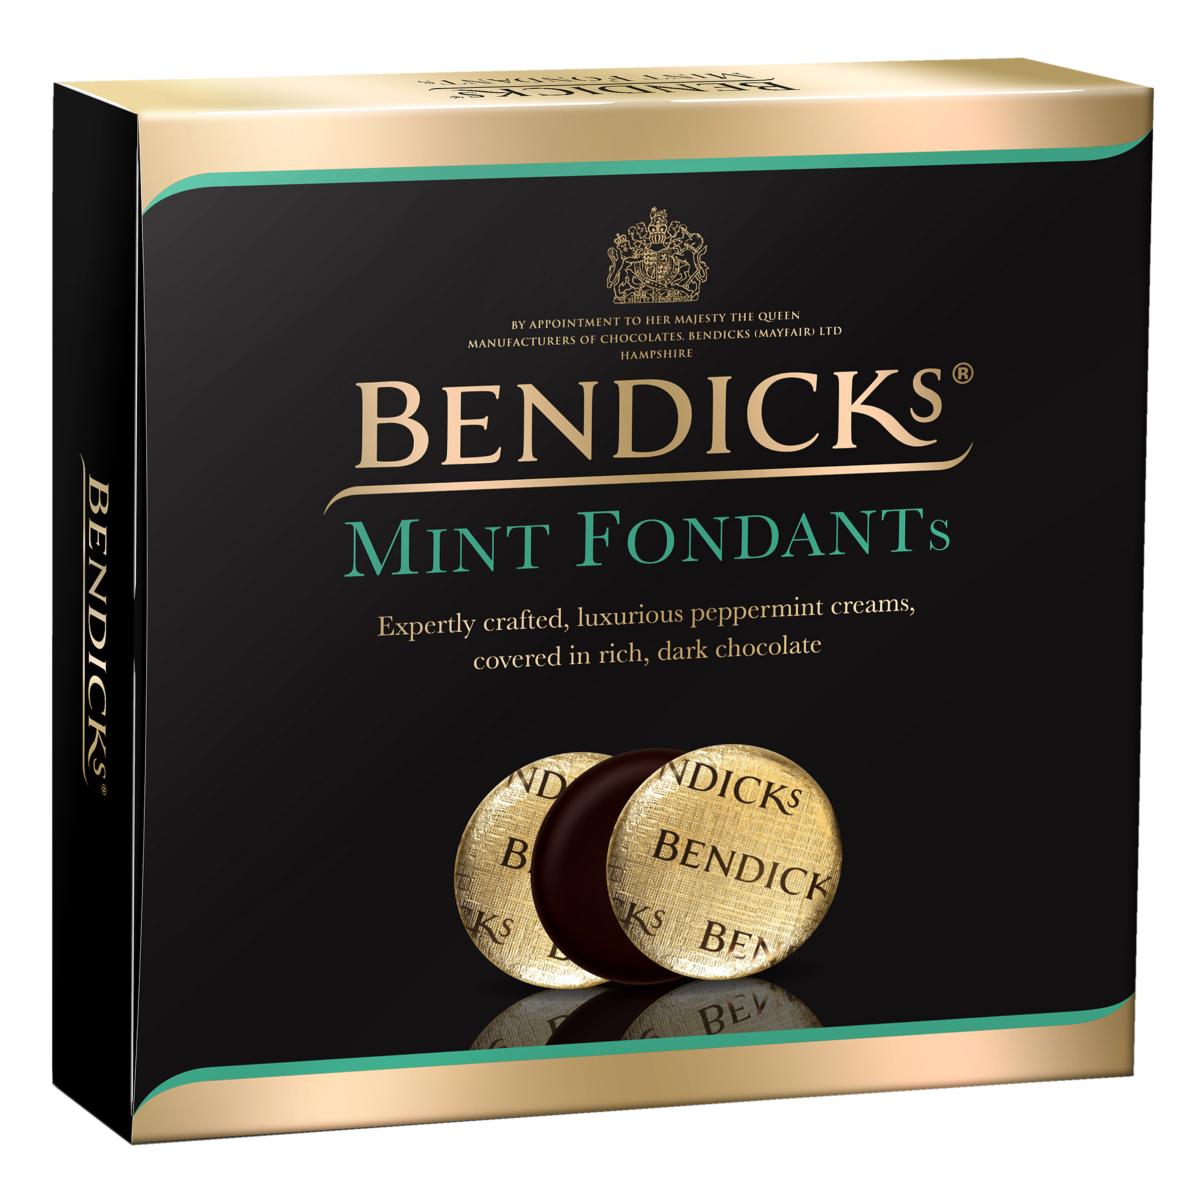 Bendicks Mint Fondants